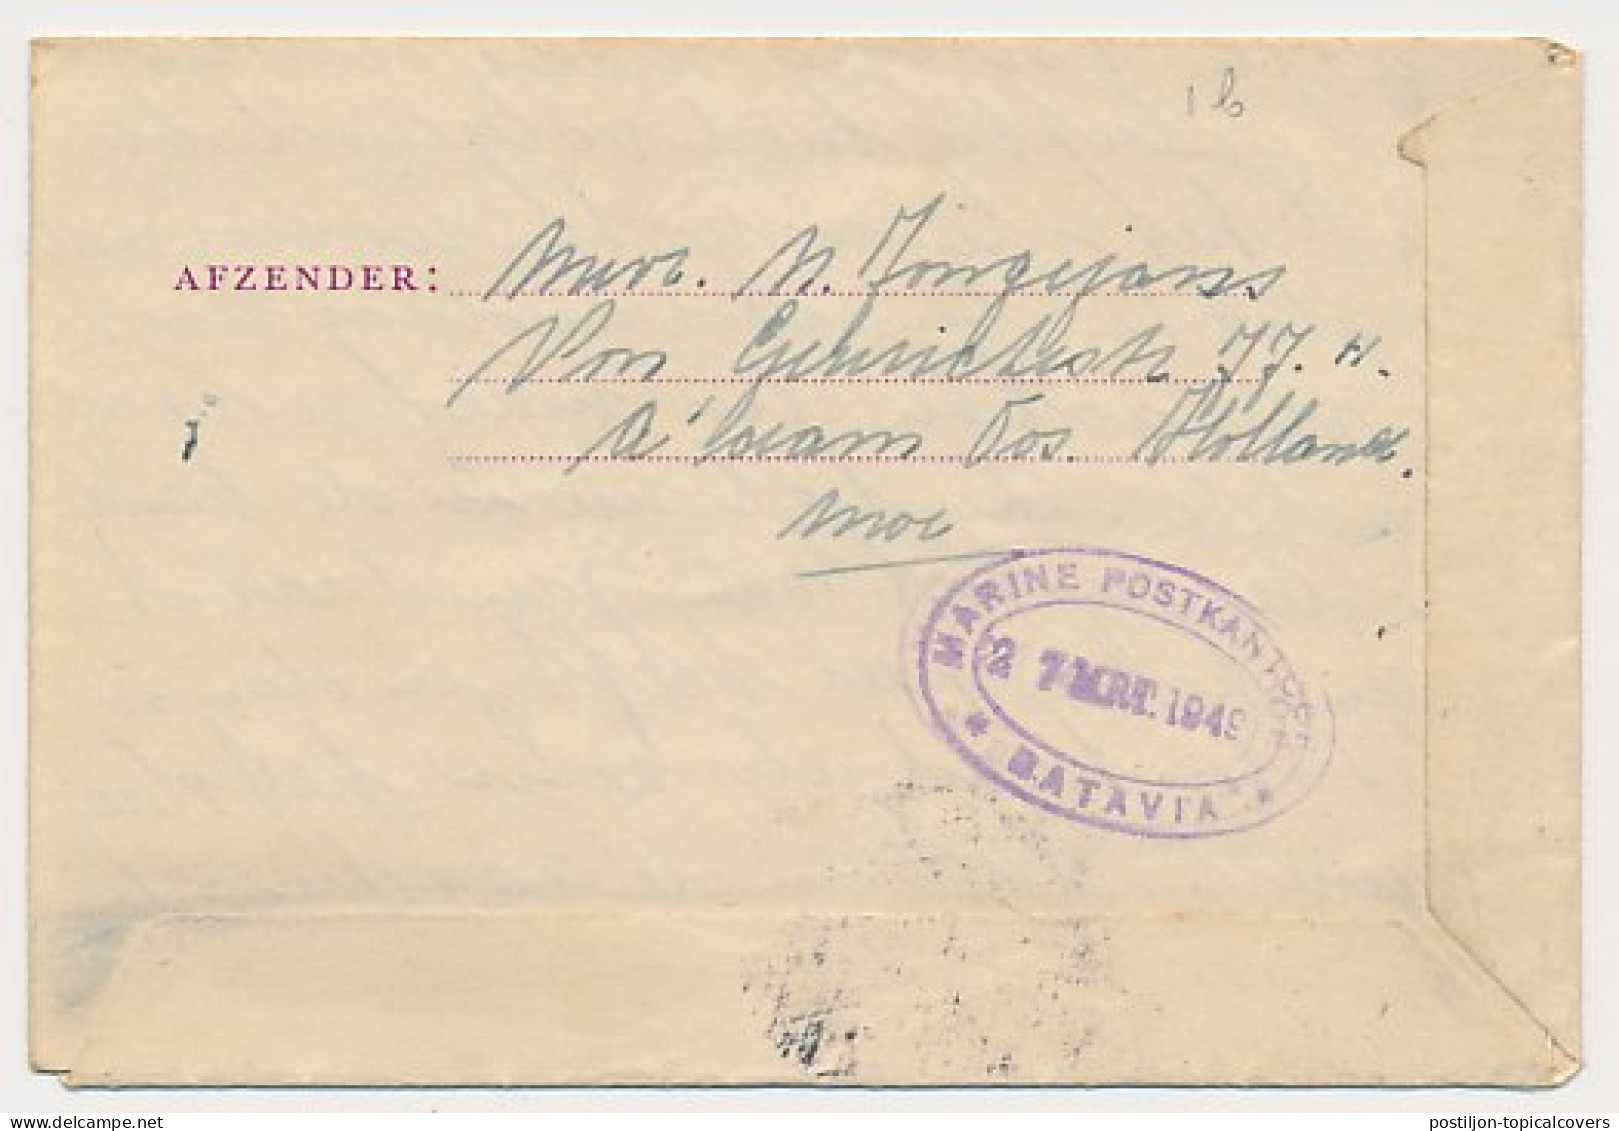 Luchtpostblad G. 1 B Amsterdam - Batavia Ned. Indie 1949 - Material Postal